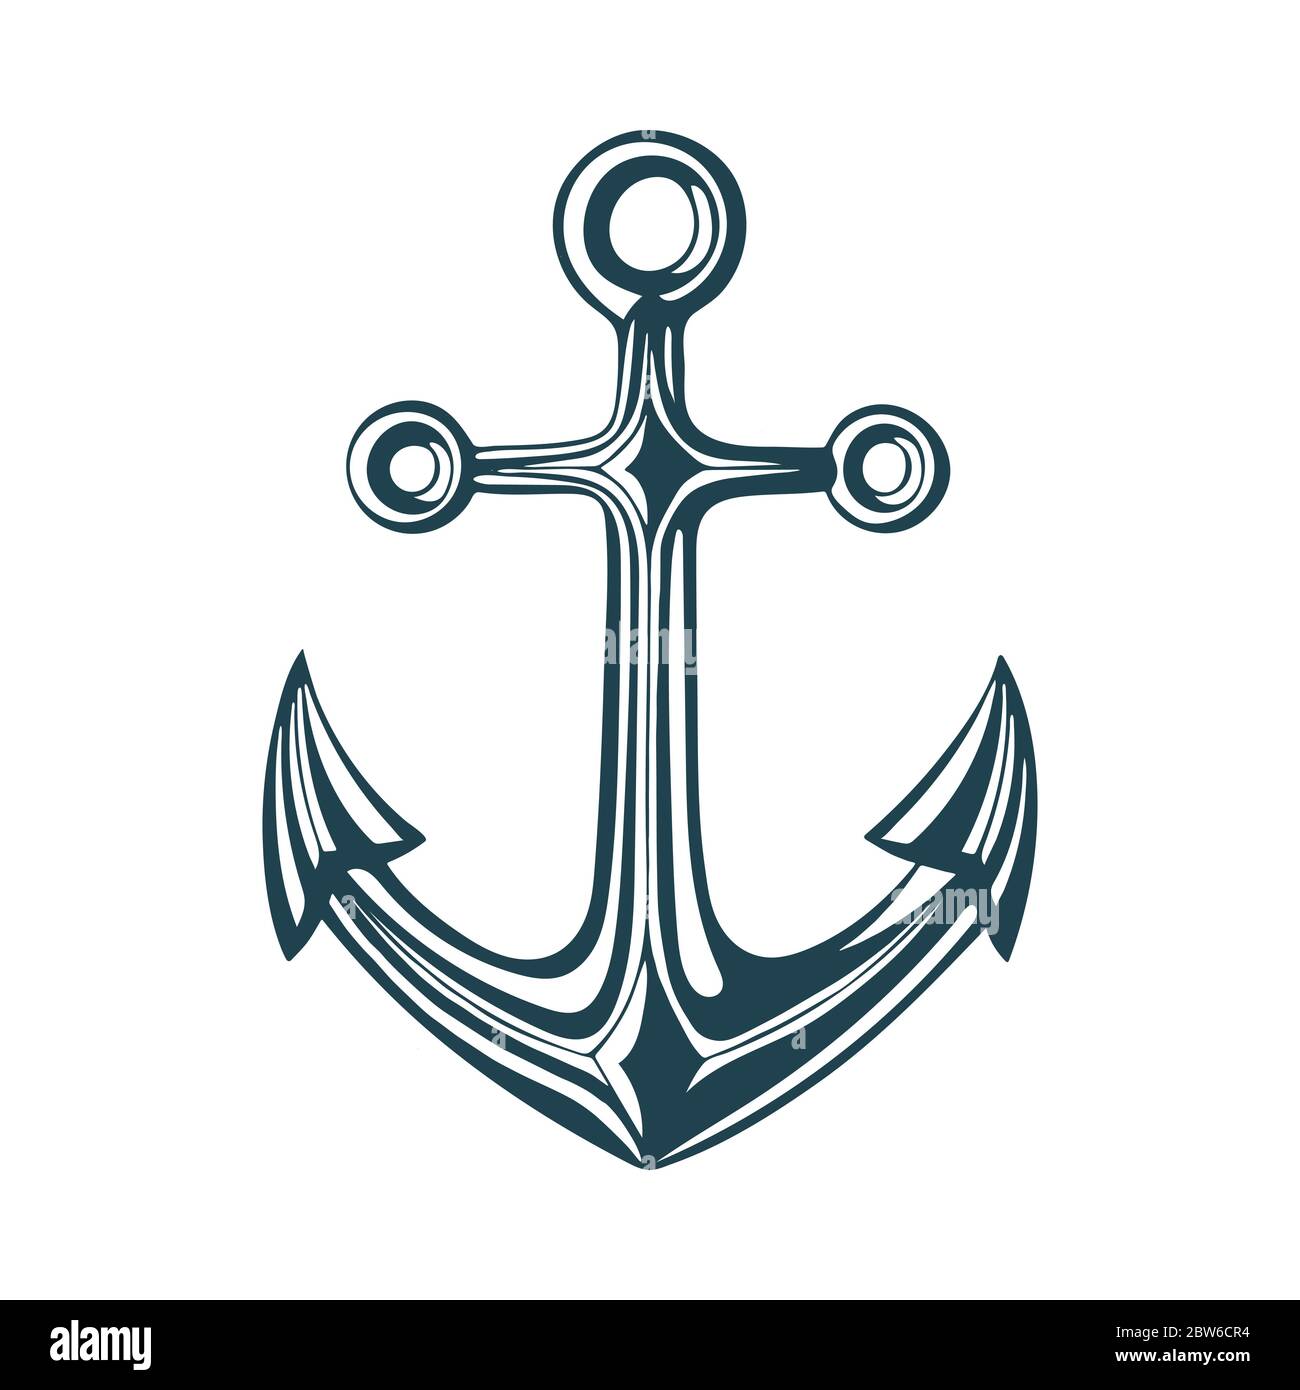 Boat anchor. Hand drawn boat anchor vector illustration. Vintage